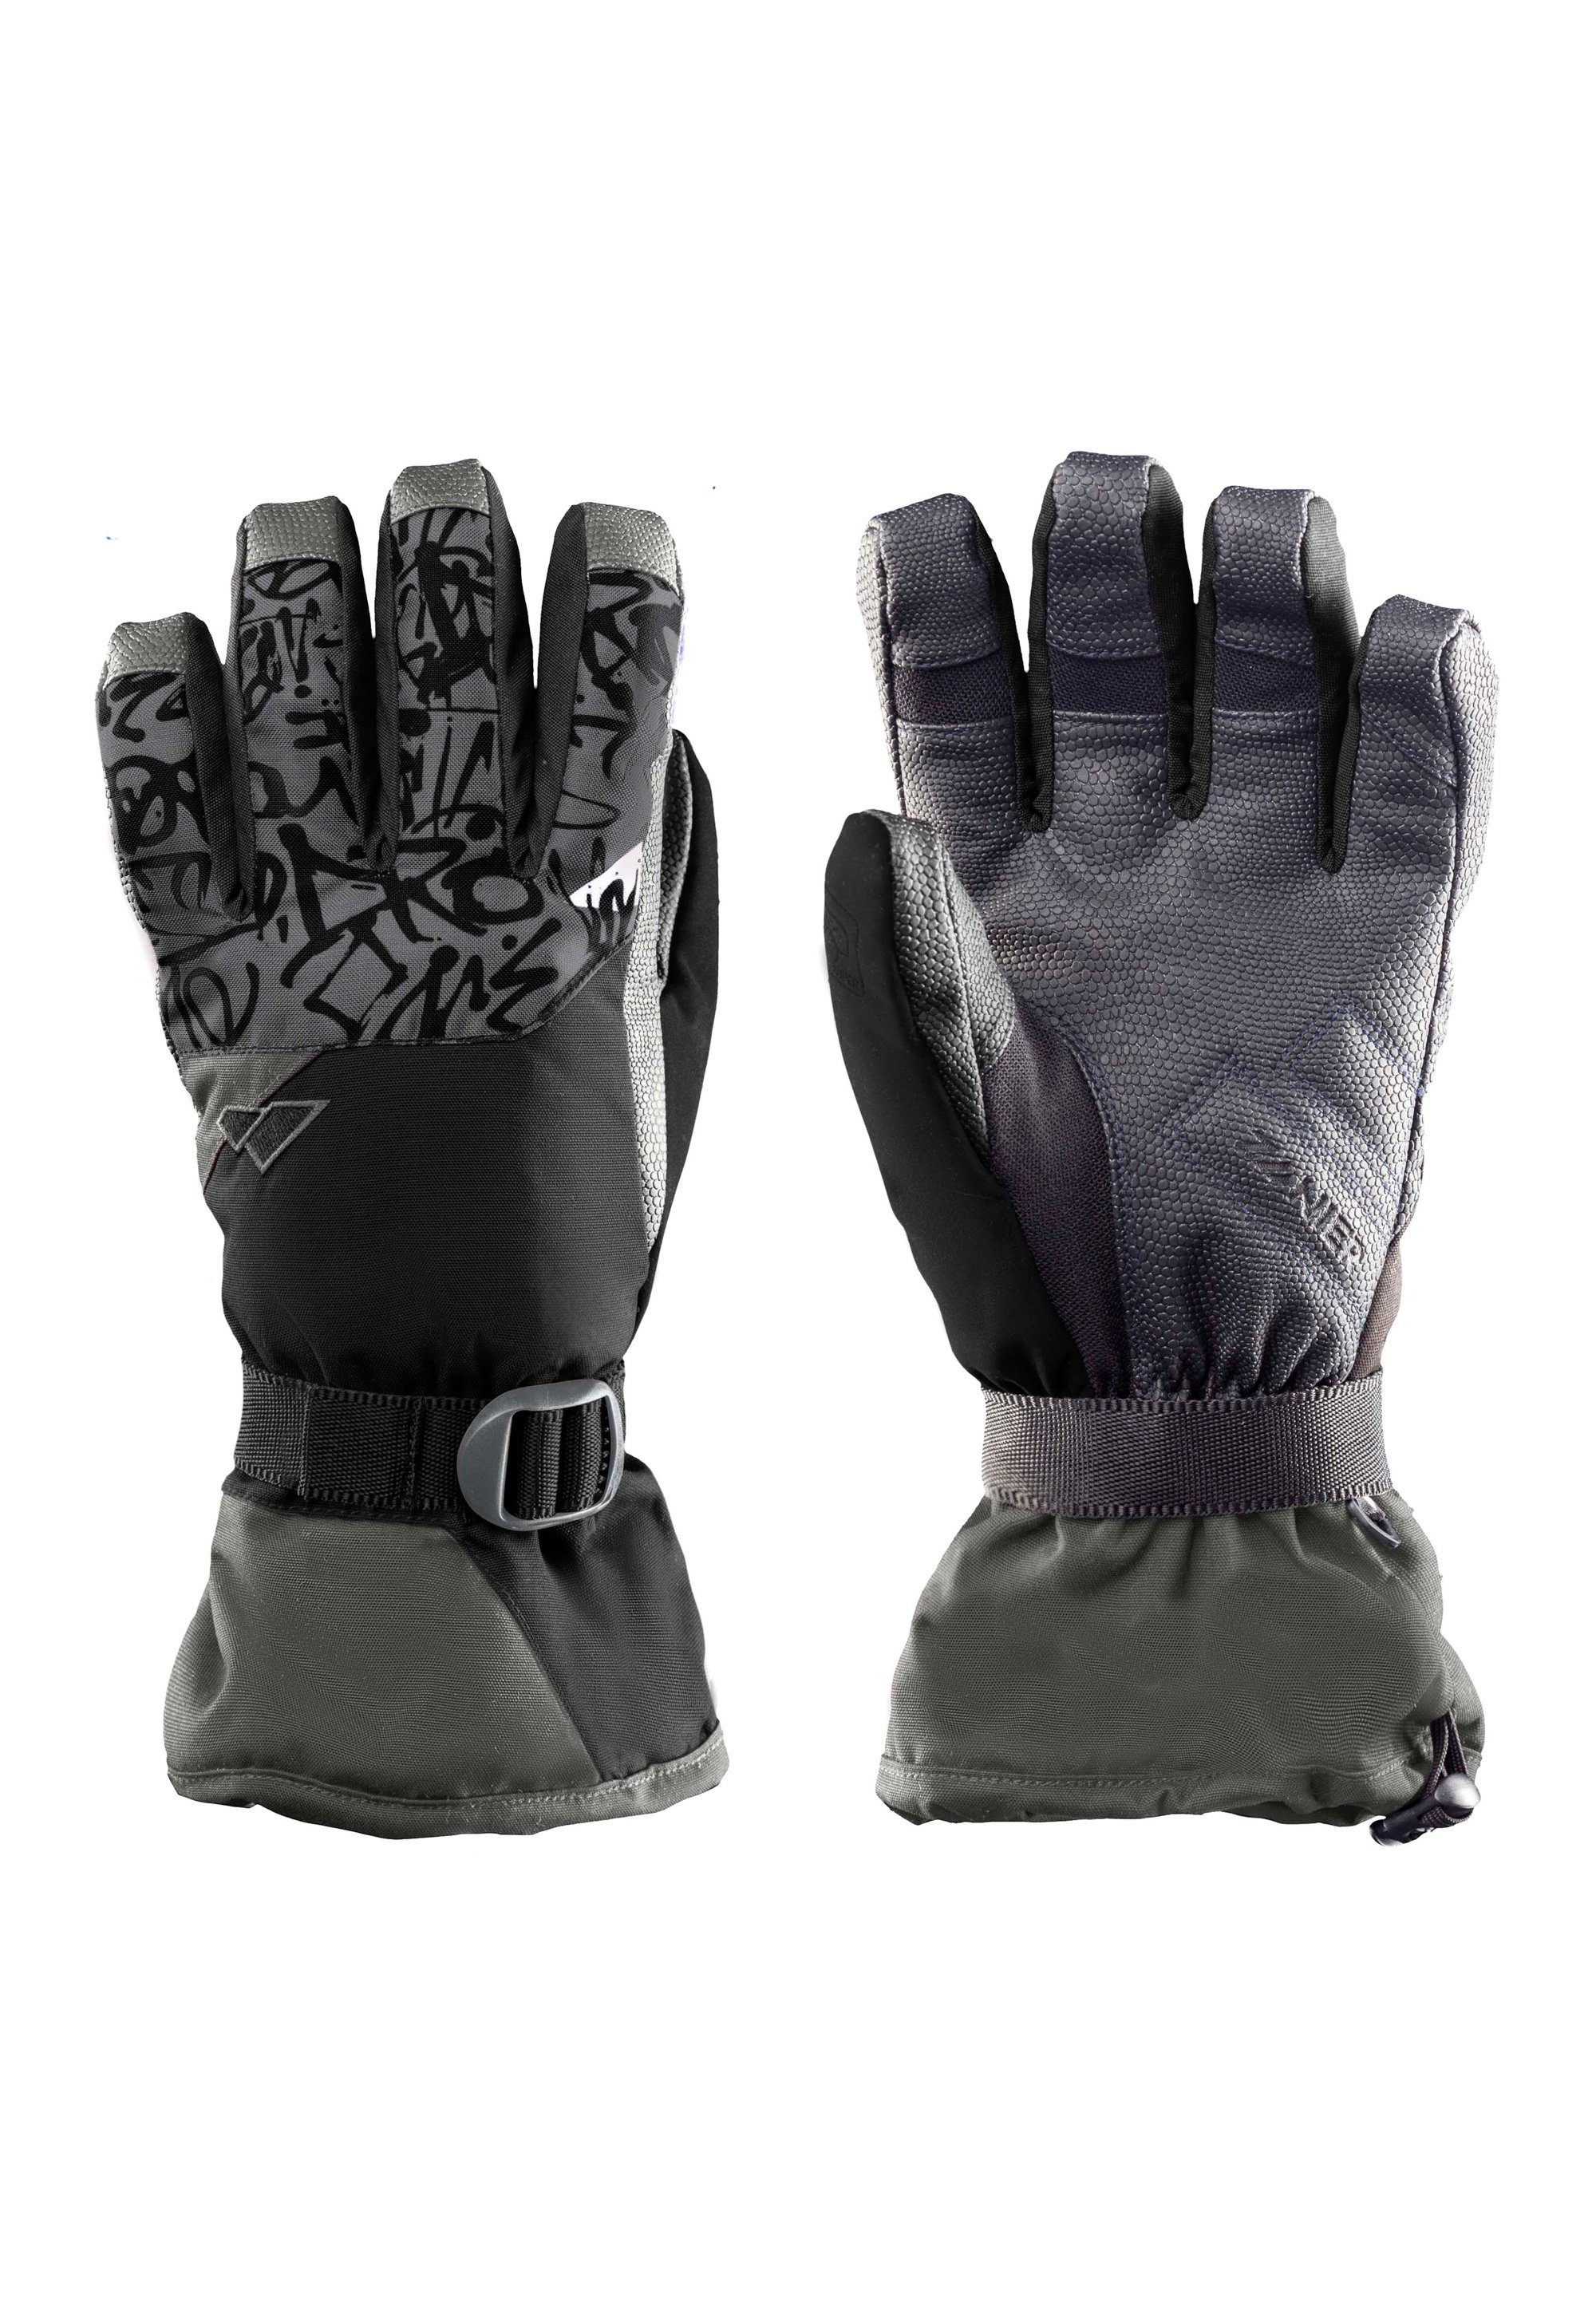 Zanier Multisporthandschuhe GAP.STX We focus black on gloves